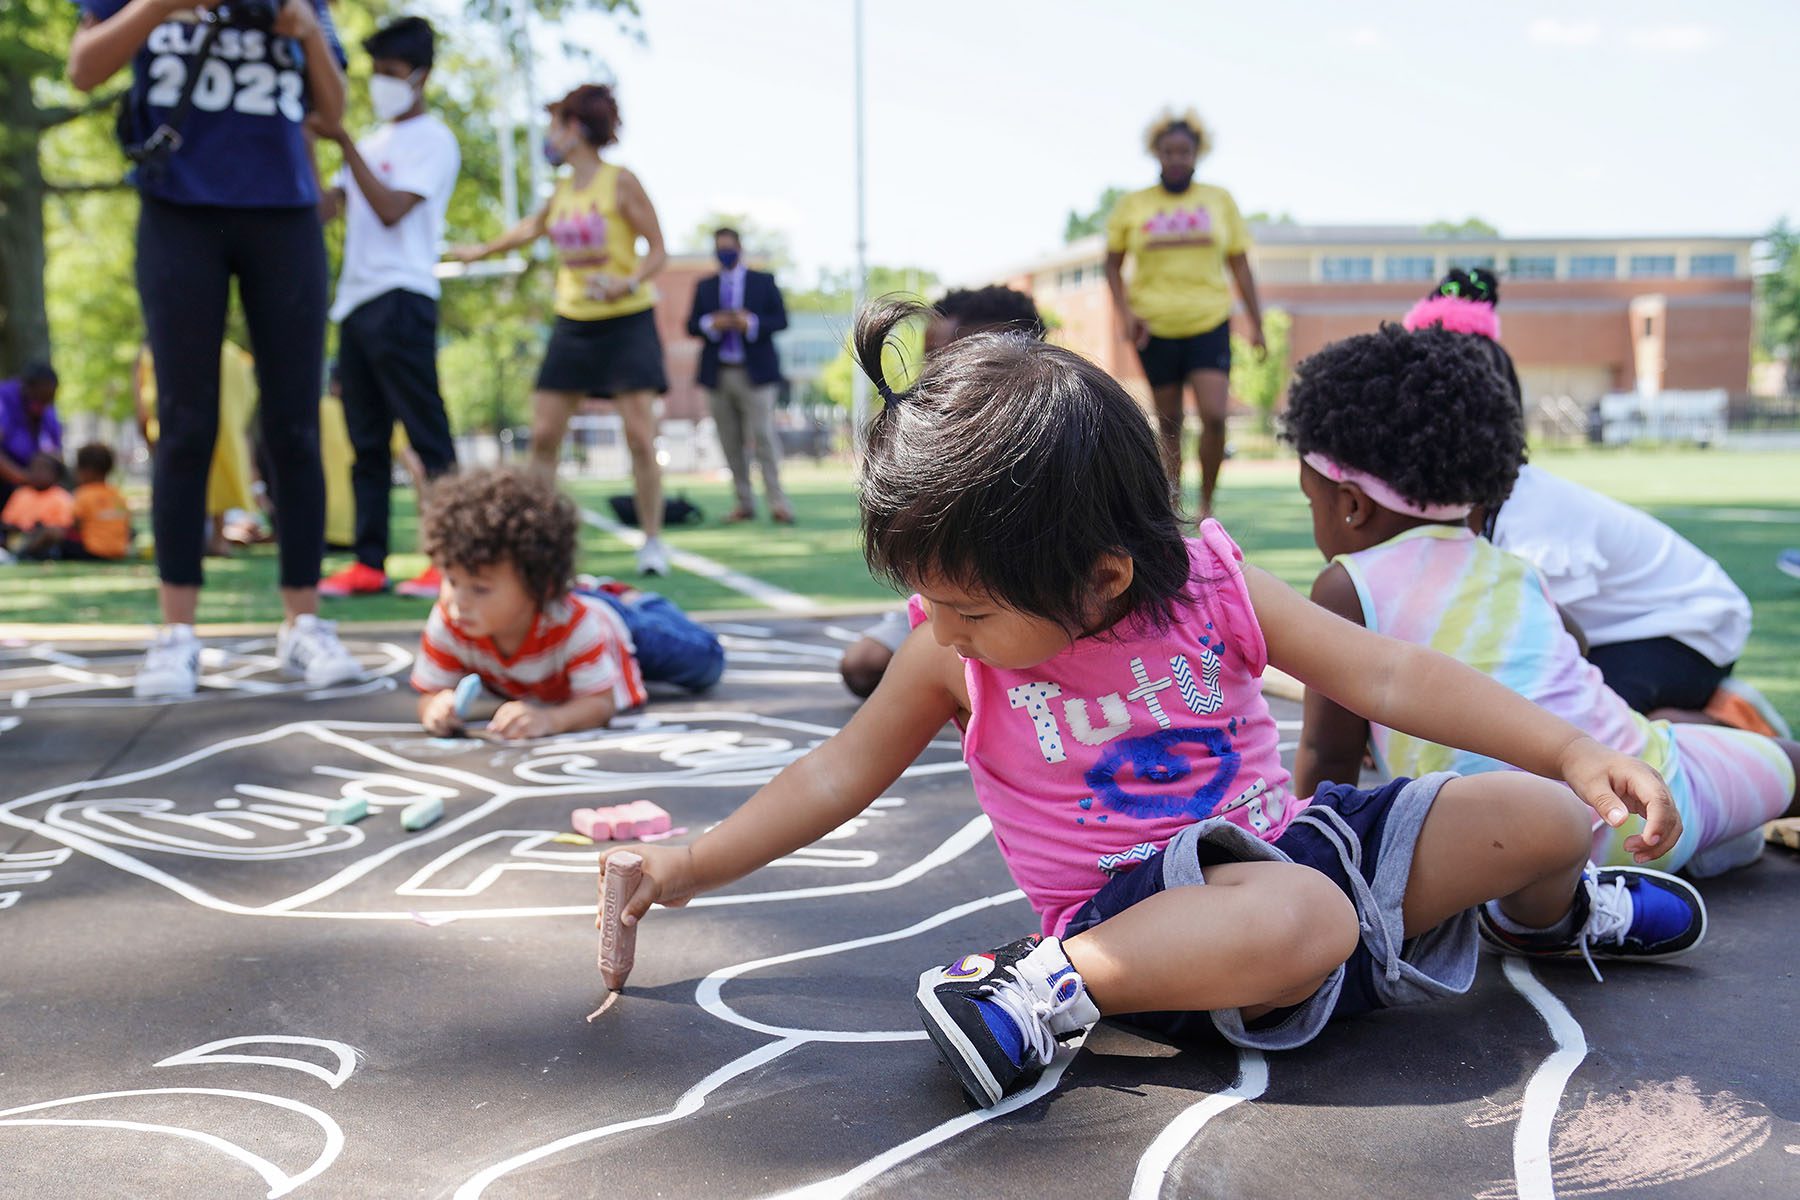 Children use sidewalk chalk to draw a mural on a playground.